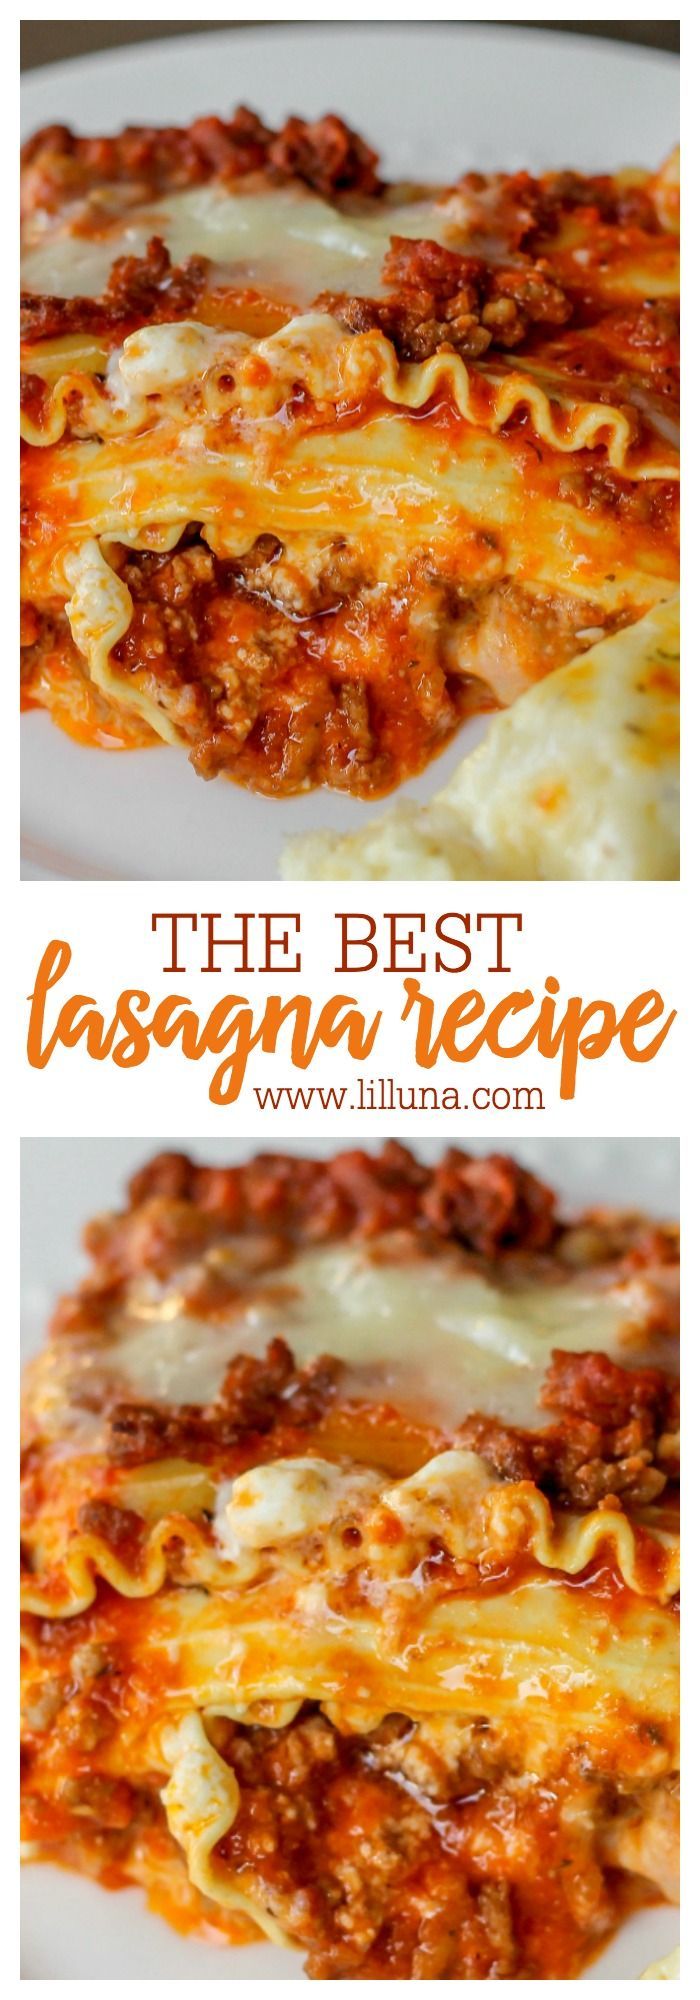 Our favorite Lasagna Recipe { lilluna.com } Beef, pork, three cheeses, and lots of